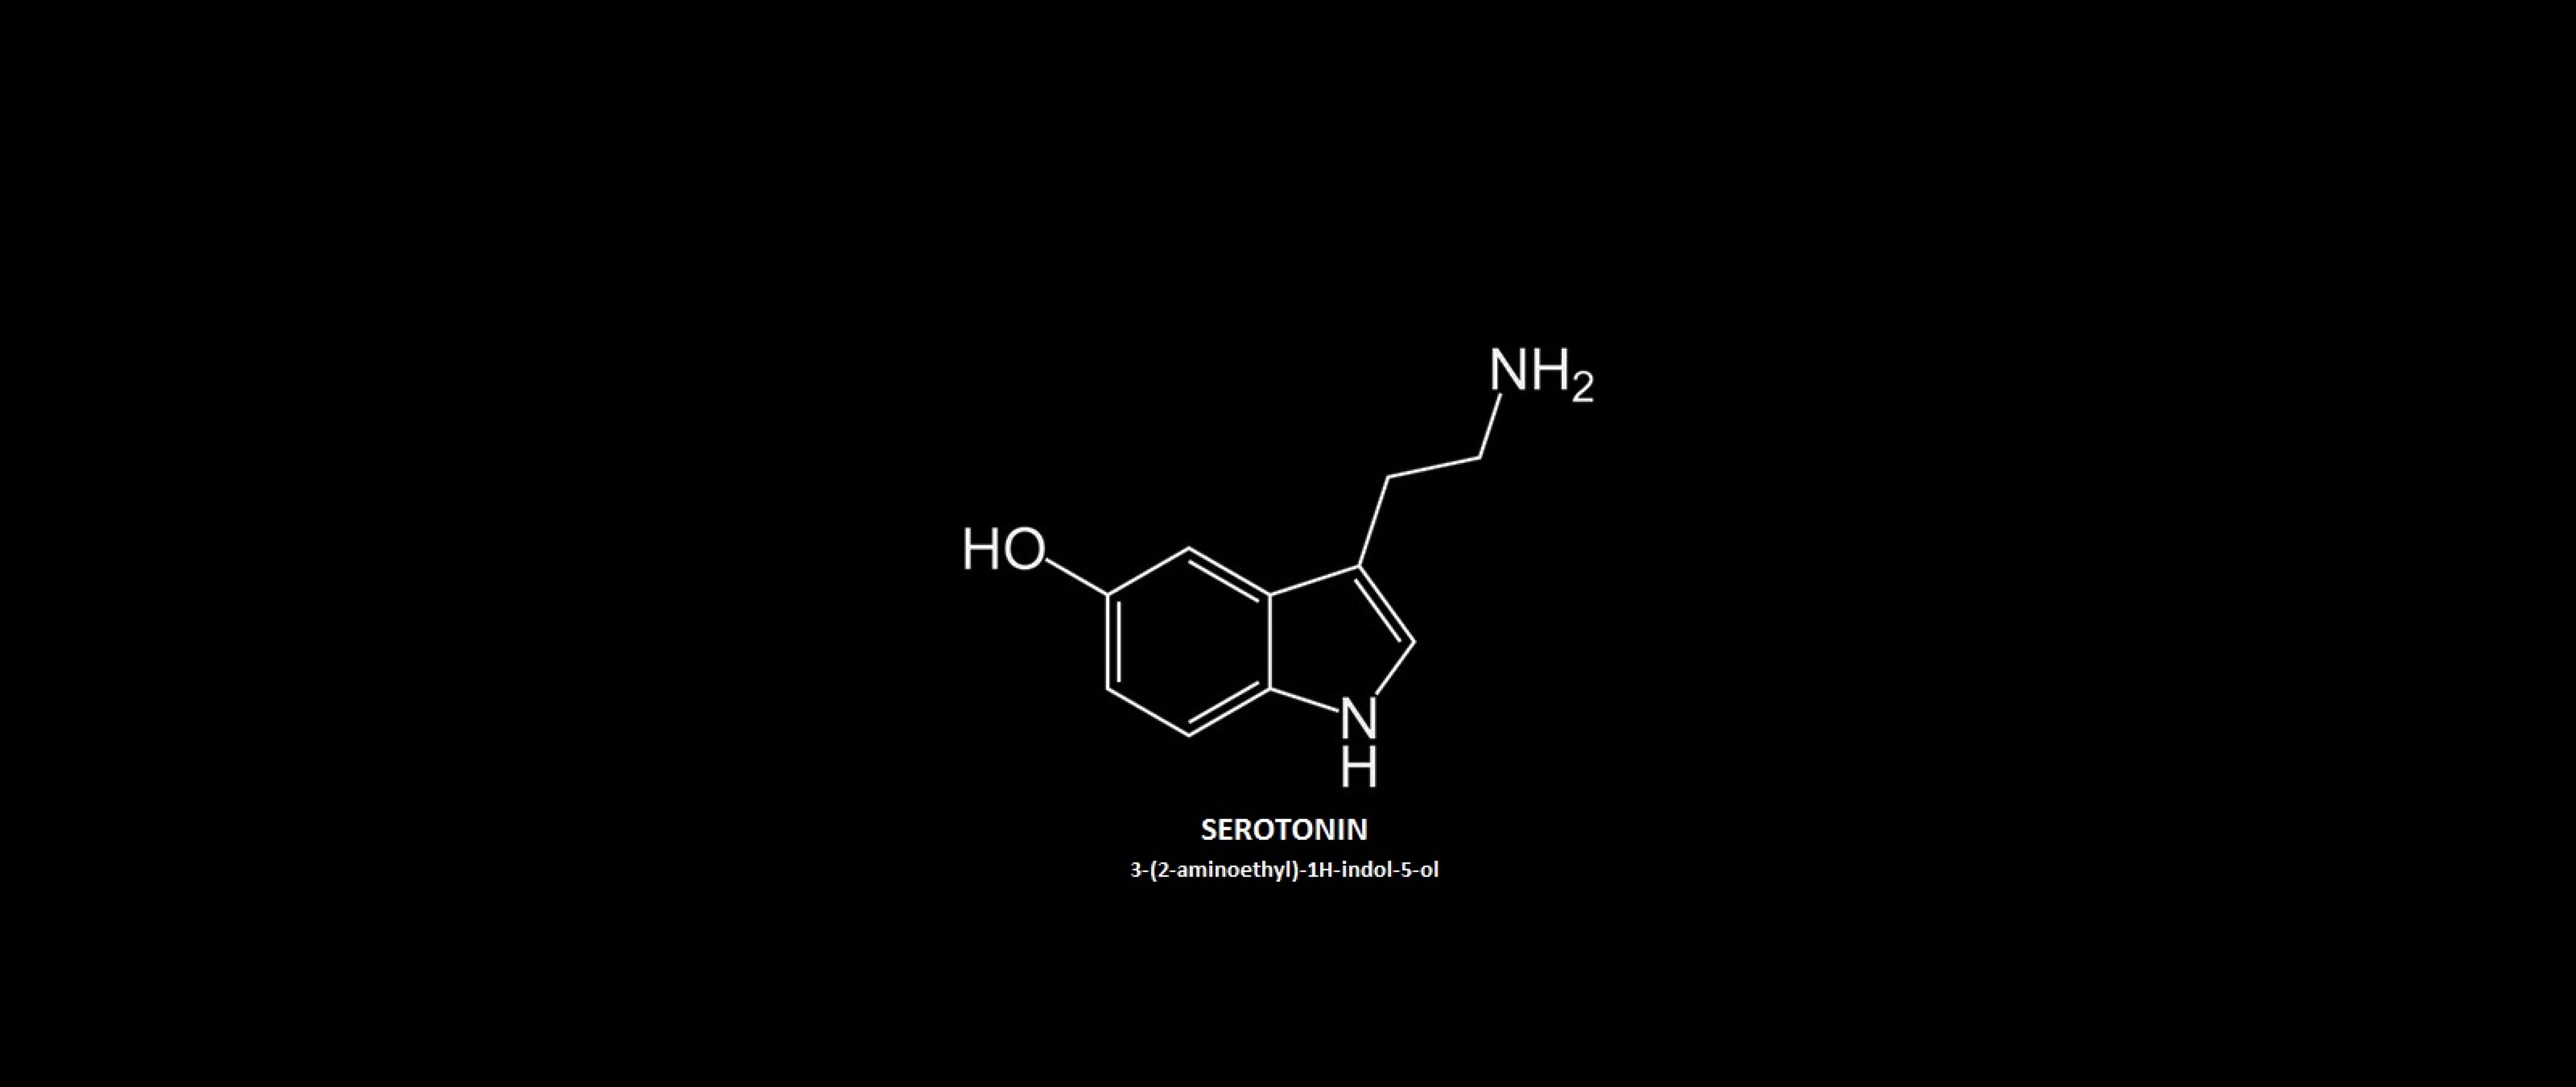 Горячо х 0 0. Формулы на черном фоне. Дофамин формула на черном фоне. Химические формулы на черном фоне. Химические формулы на черном фоне серотонин.